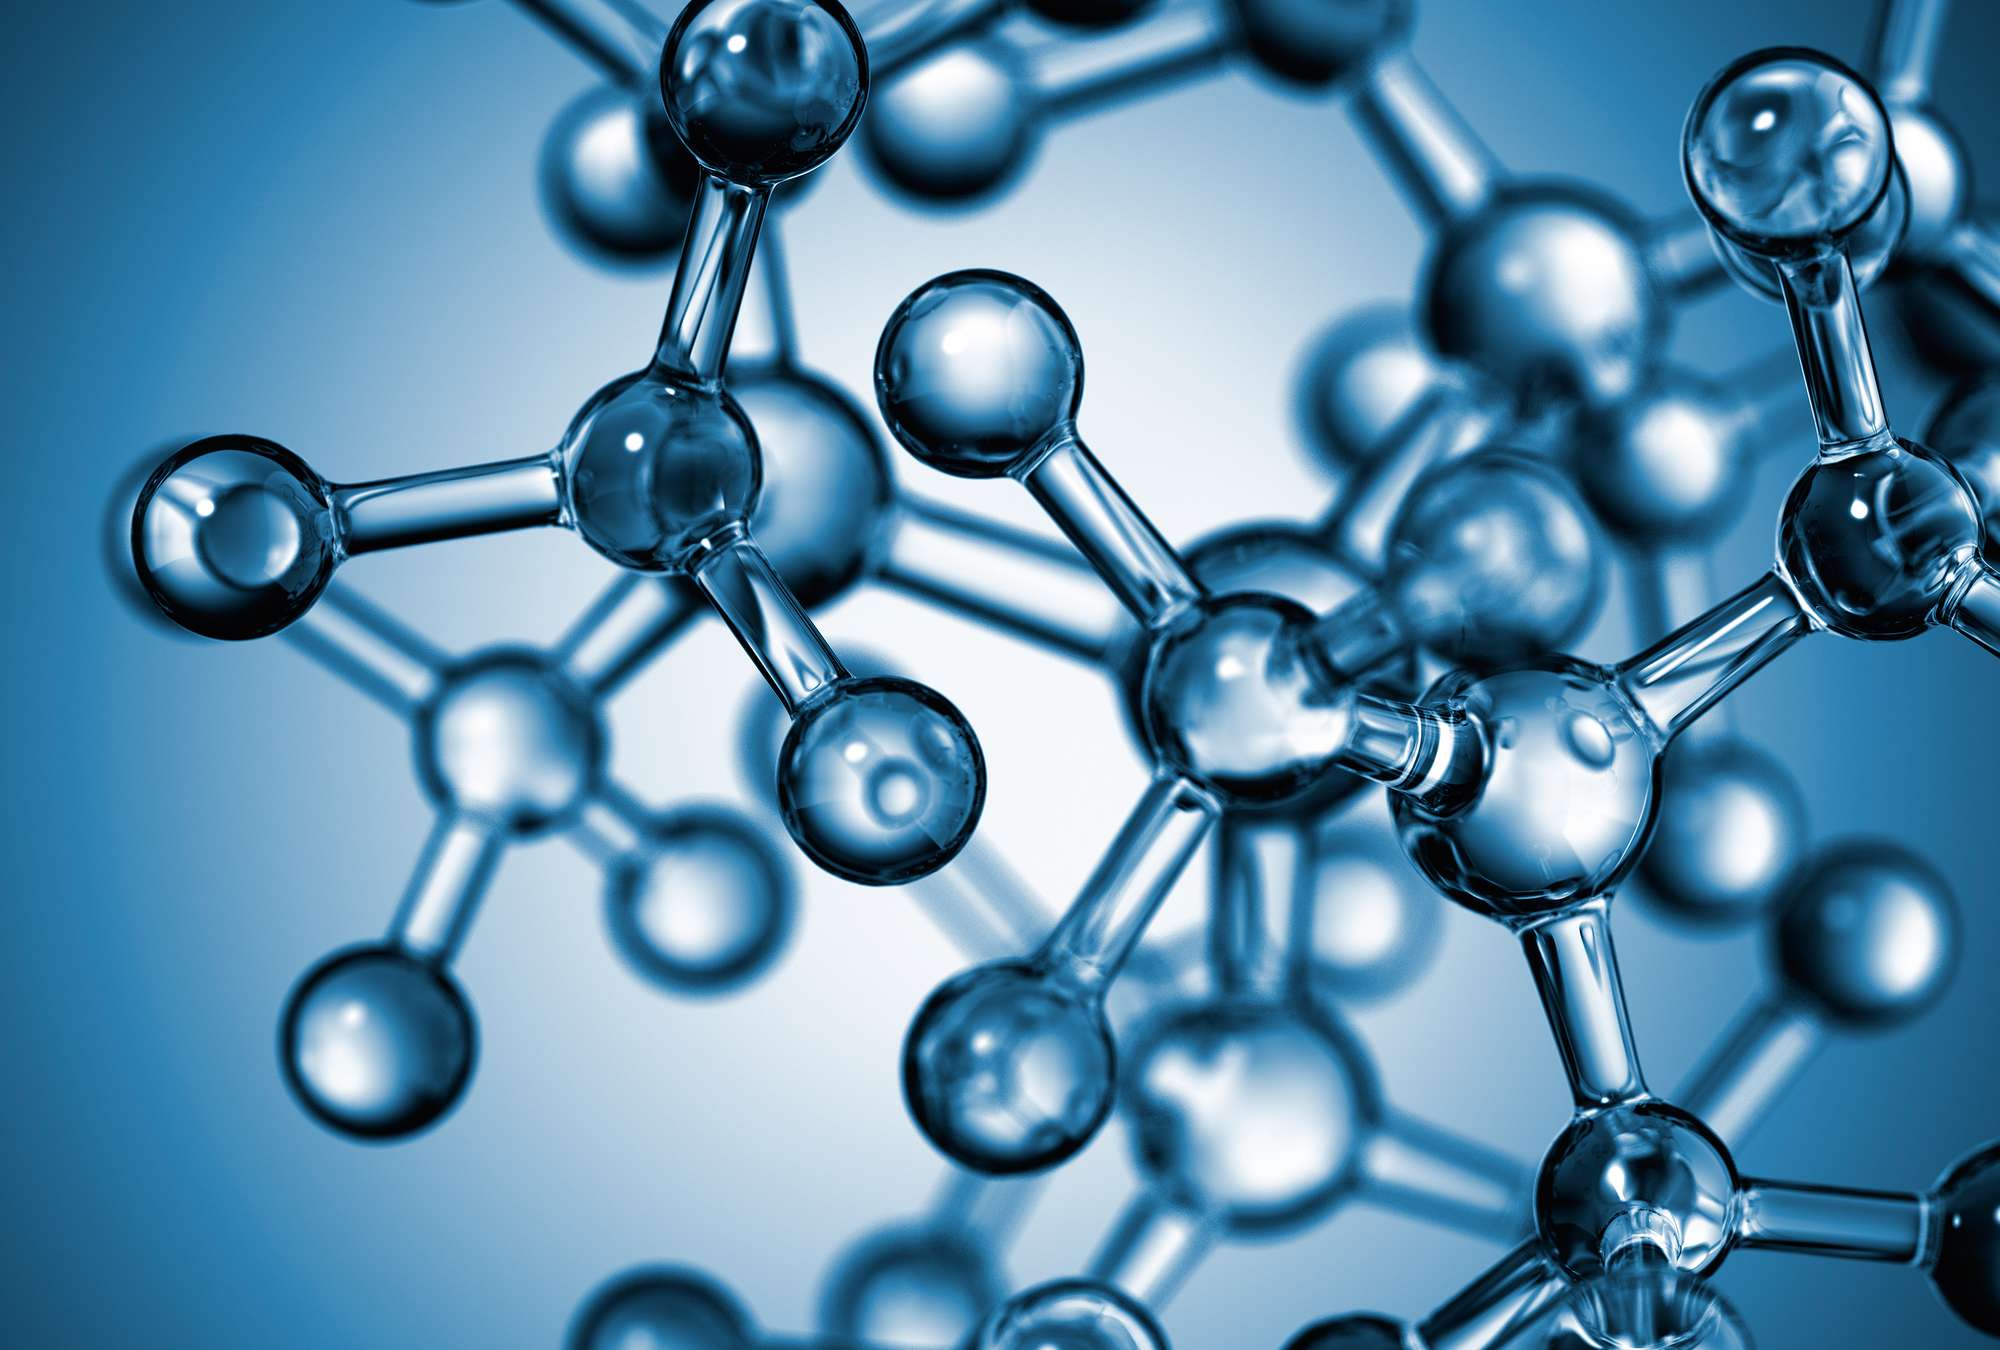             Fototapete Molekulare Verbindungen – Grafisches Design
        